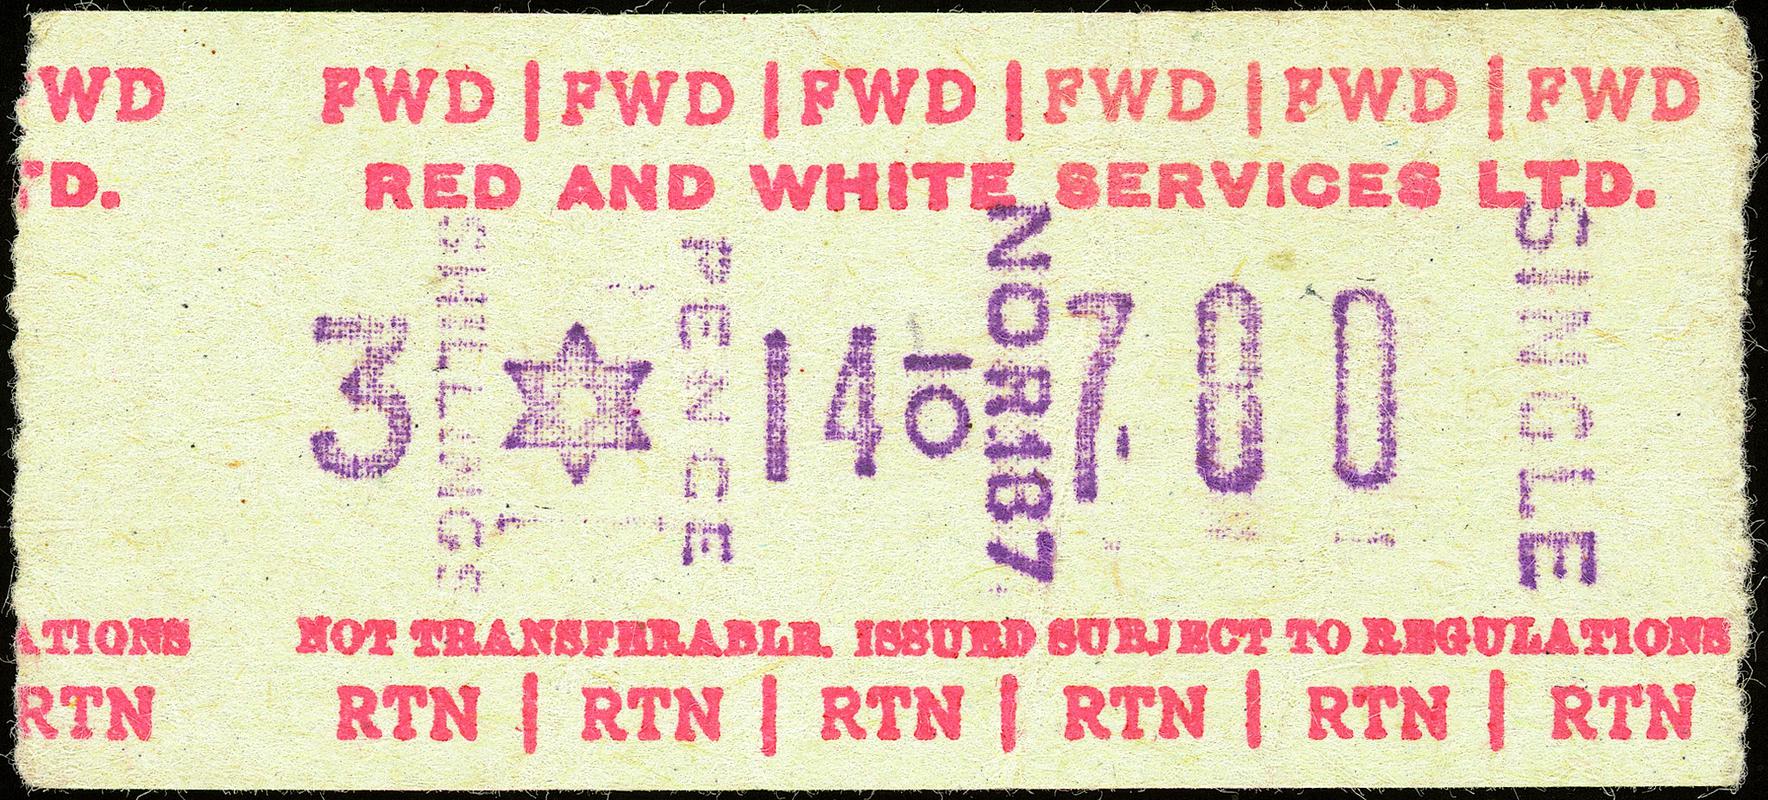 Red &amp; White Services Ltd. bus ticket